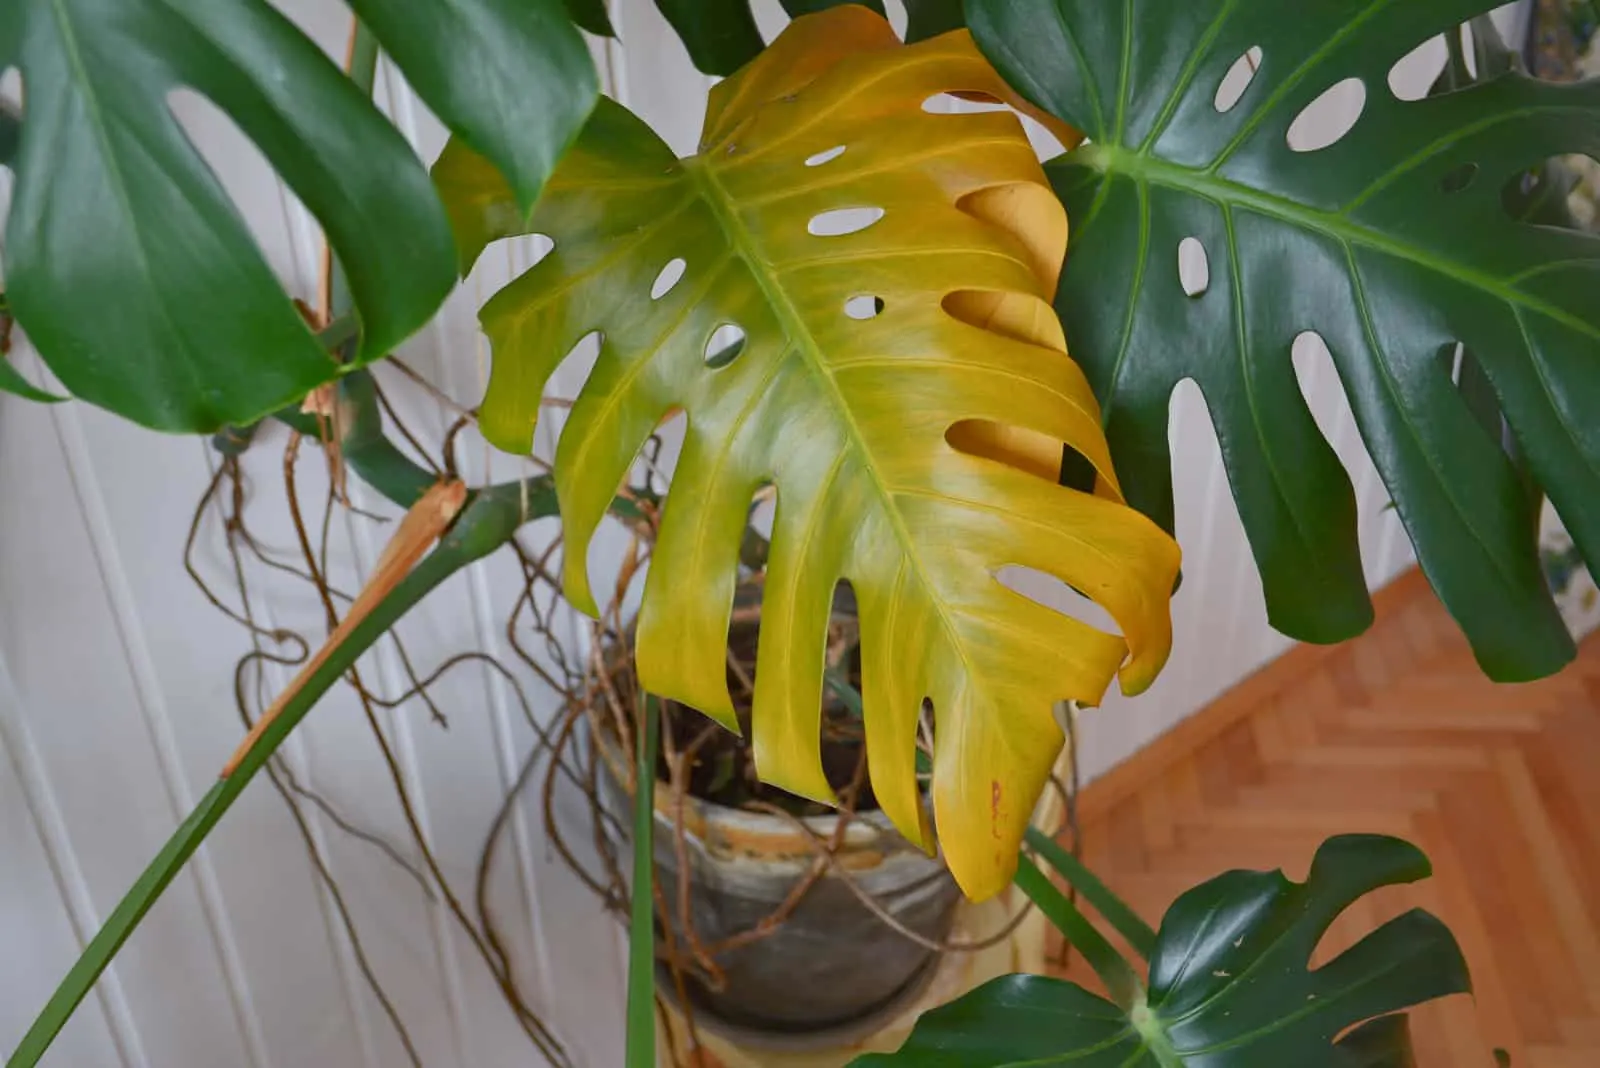 Monstera leaf turning yellow